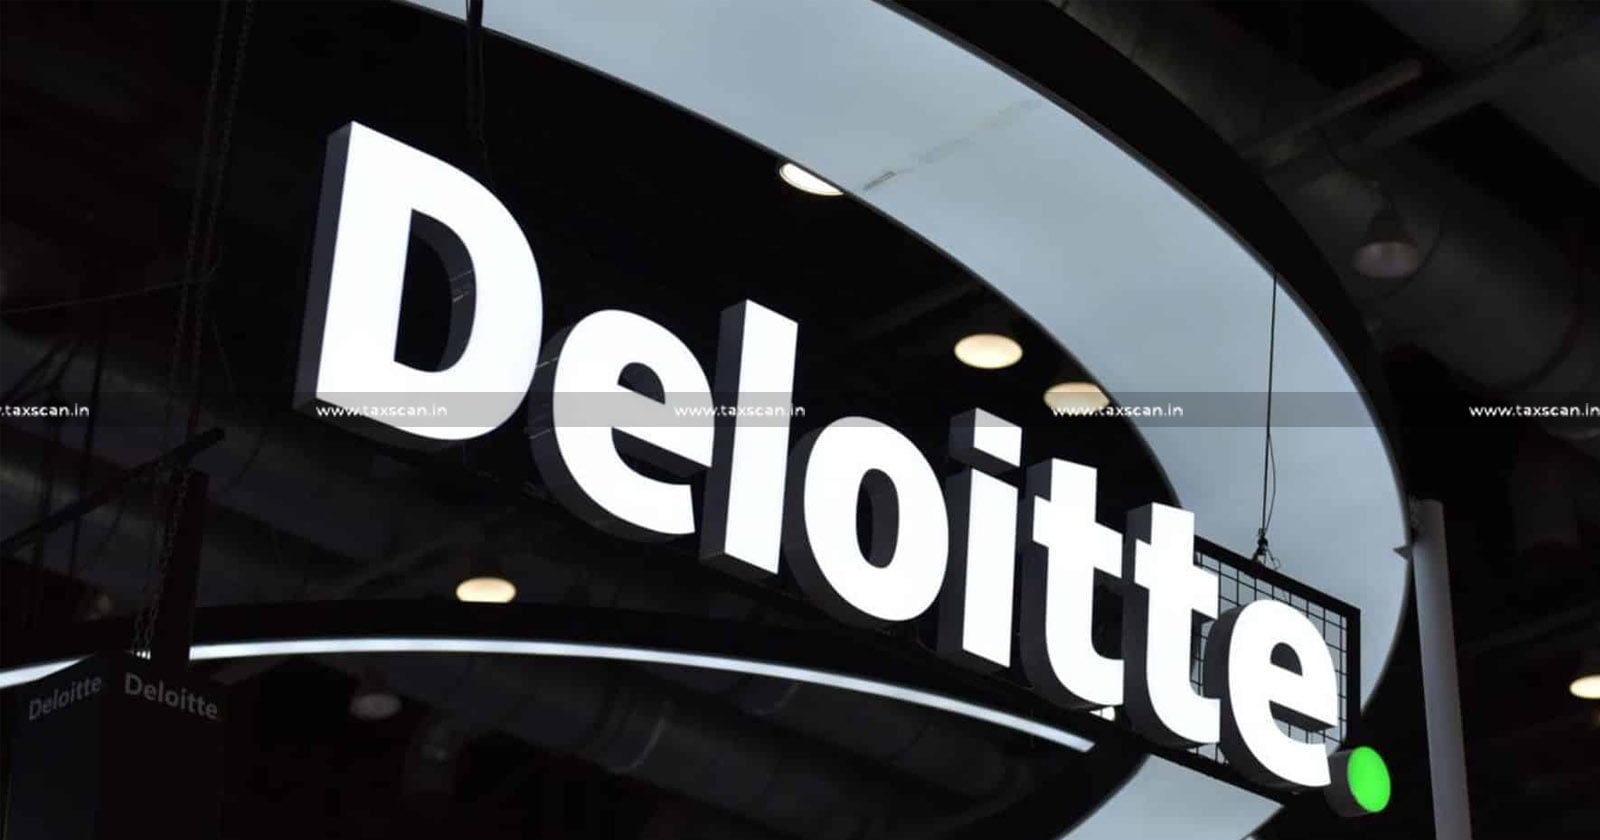 CA Vacancy in Deloitte - CA jobs - CA - Vacancy - Deloitte - taxscan